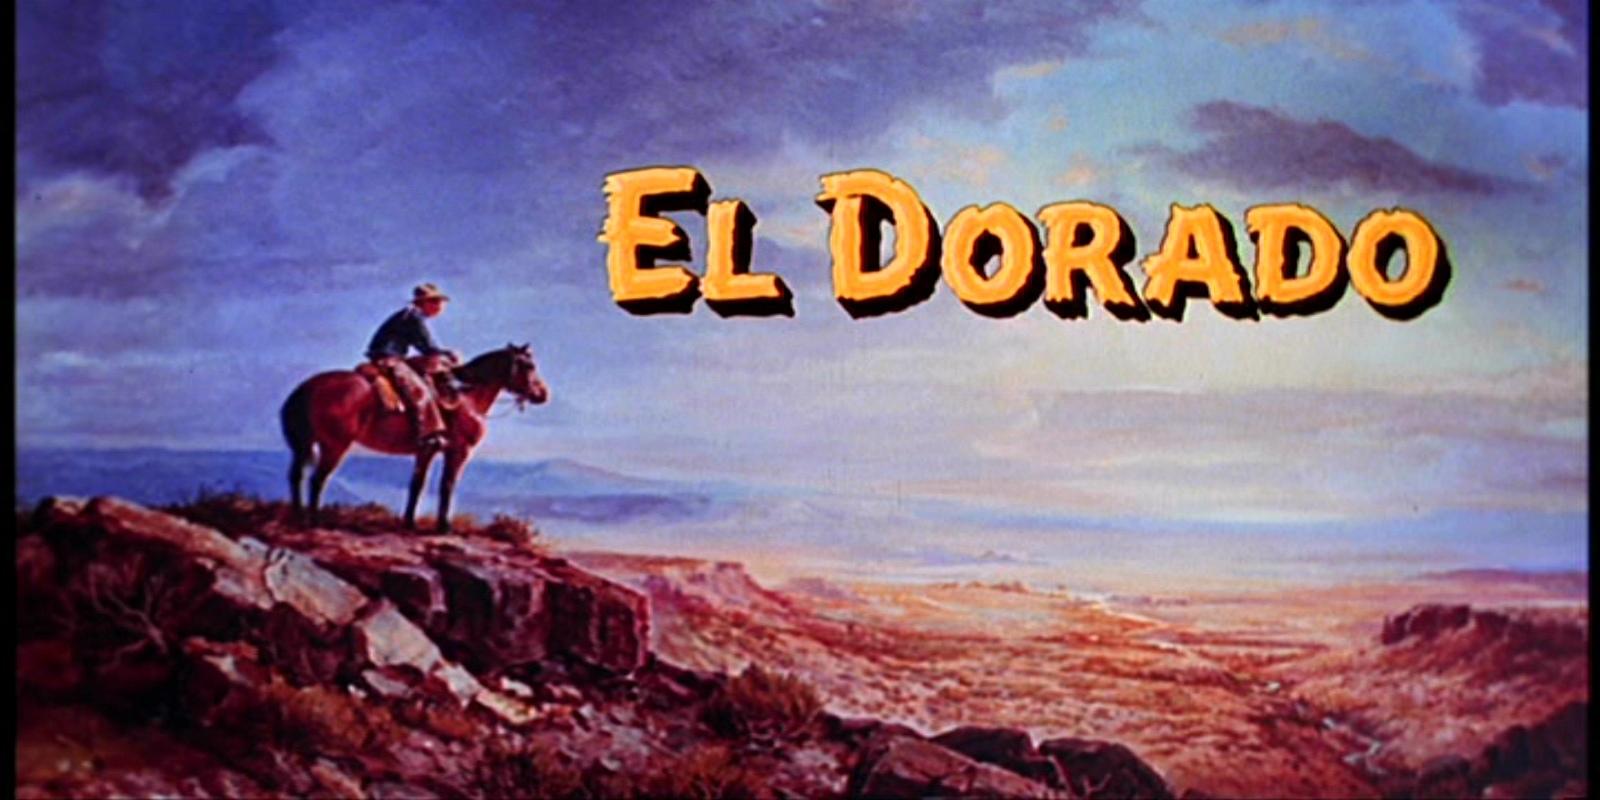 El Dorado at 640 x 960 iPhone 4 size wallpapers HD quality